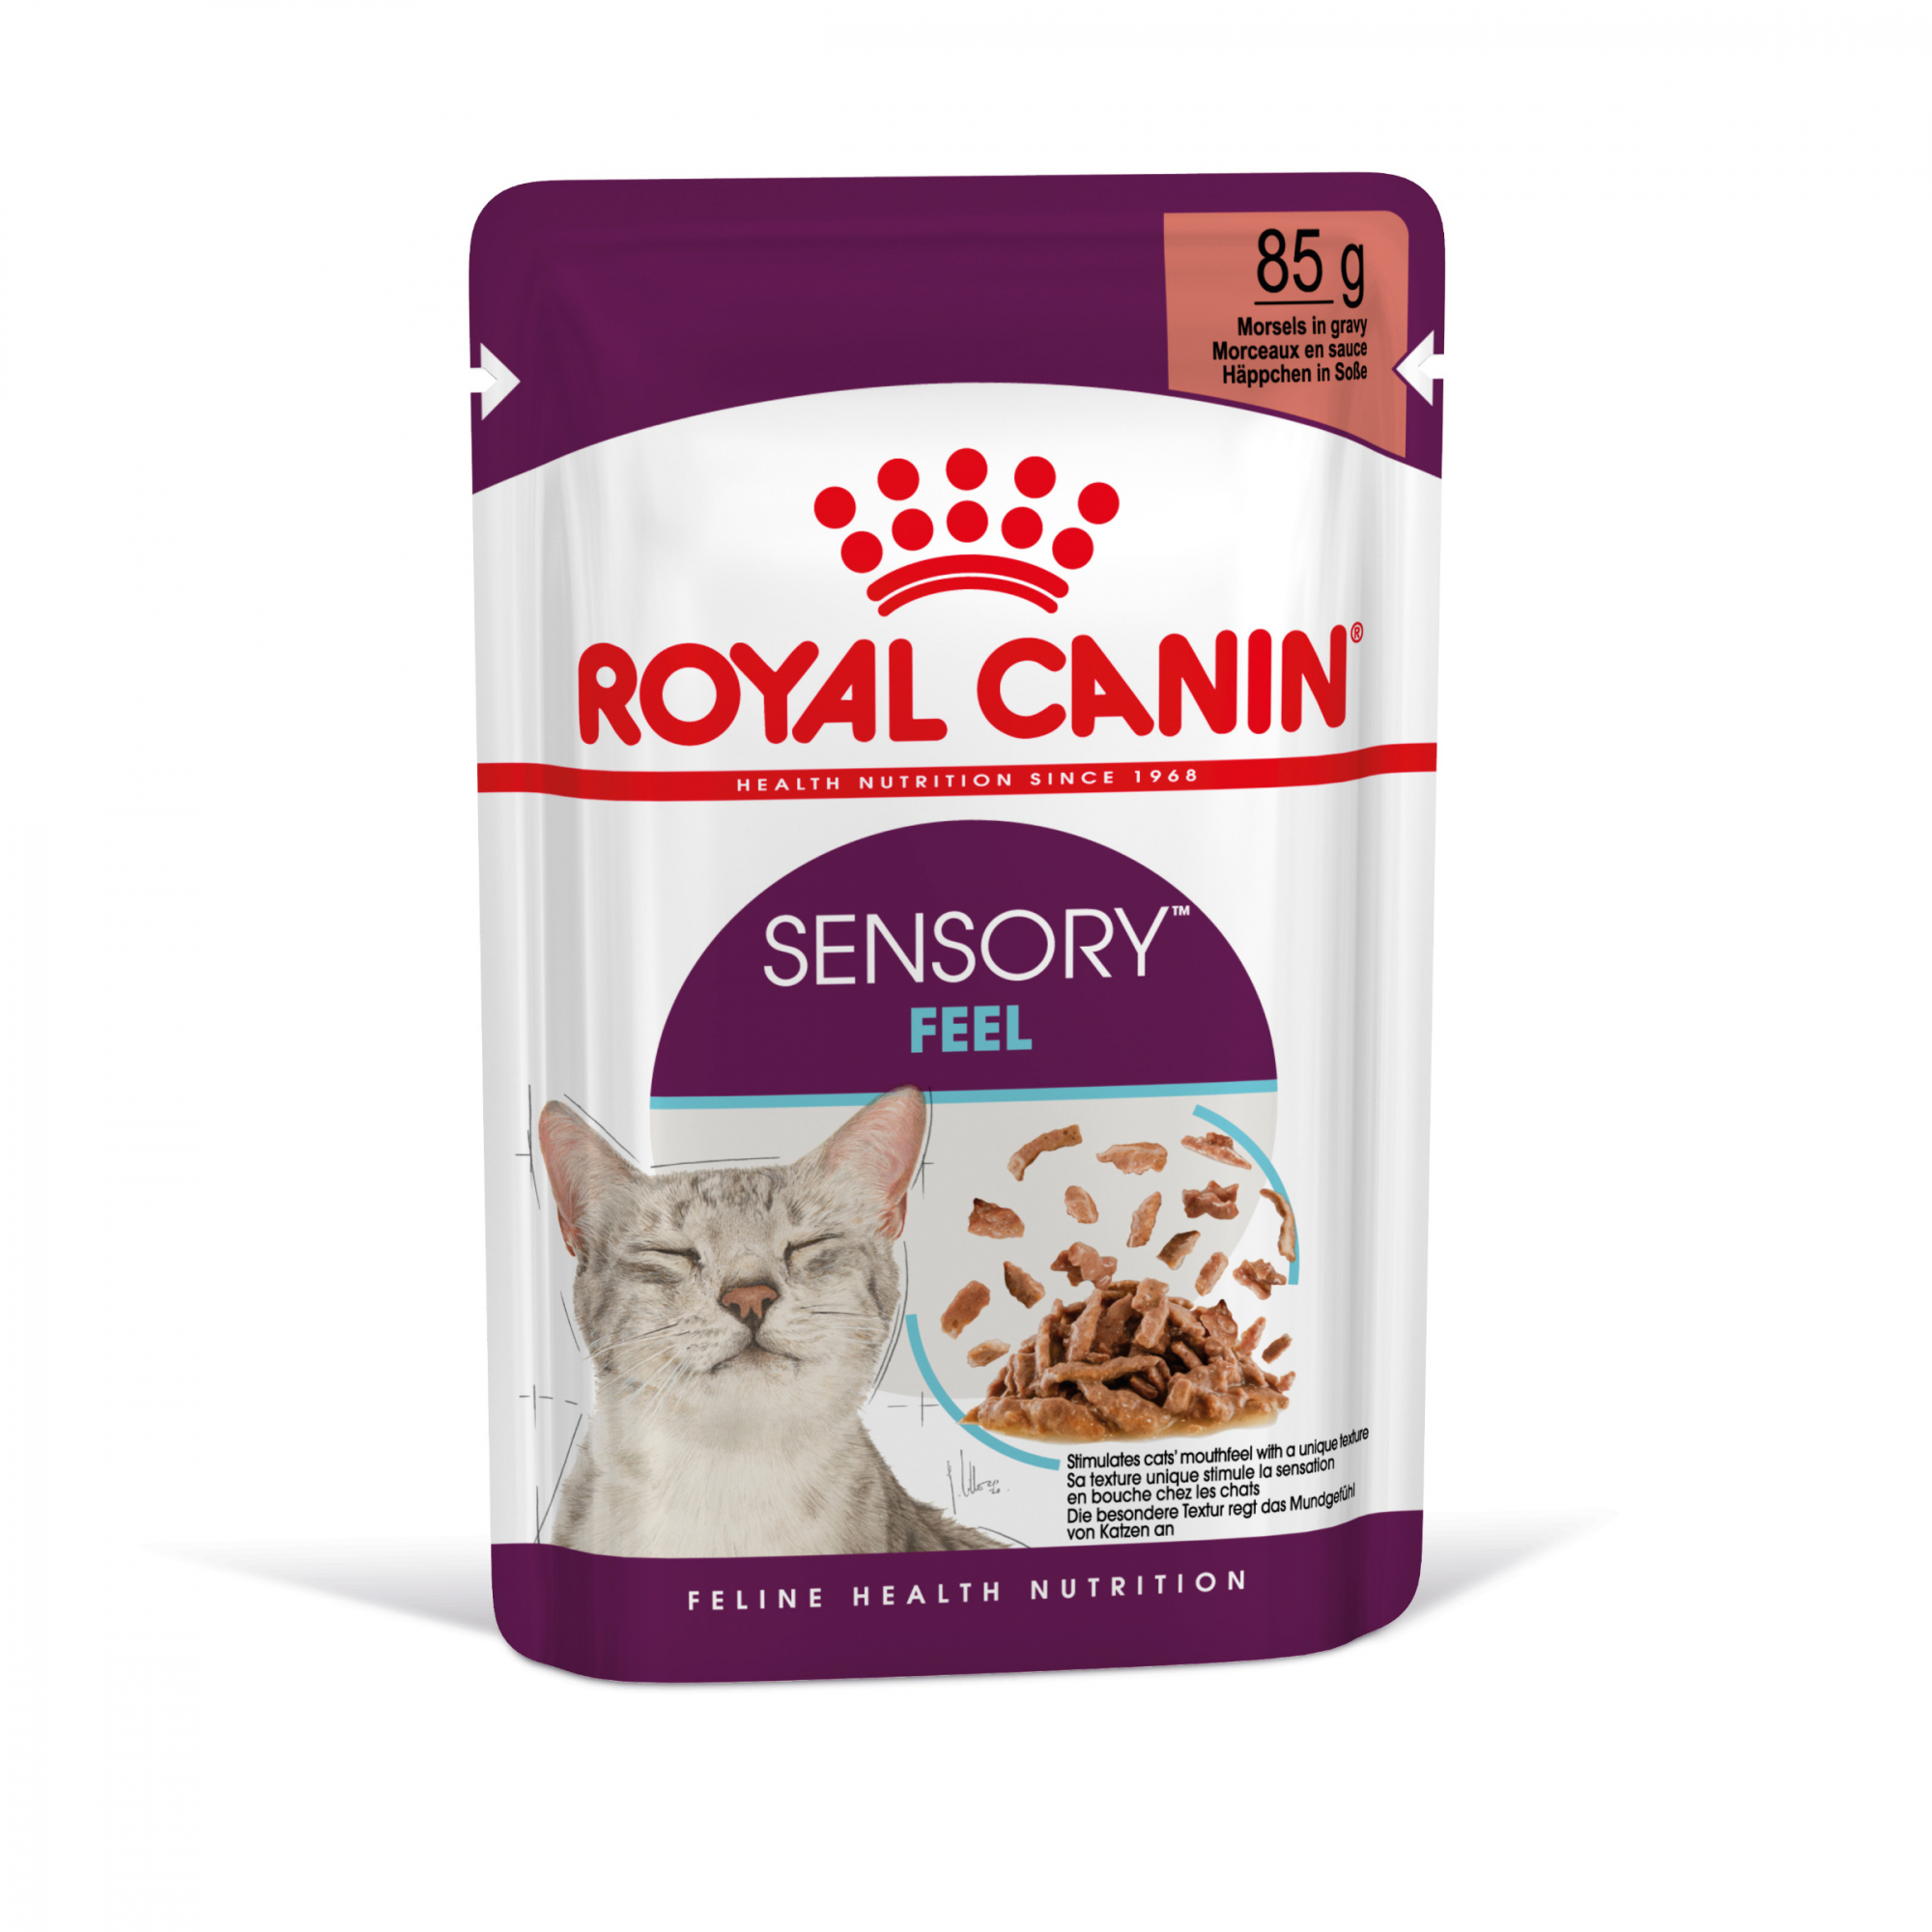 Royal Canin Sensory Feel patè in salsa per gatti